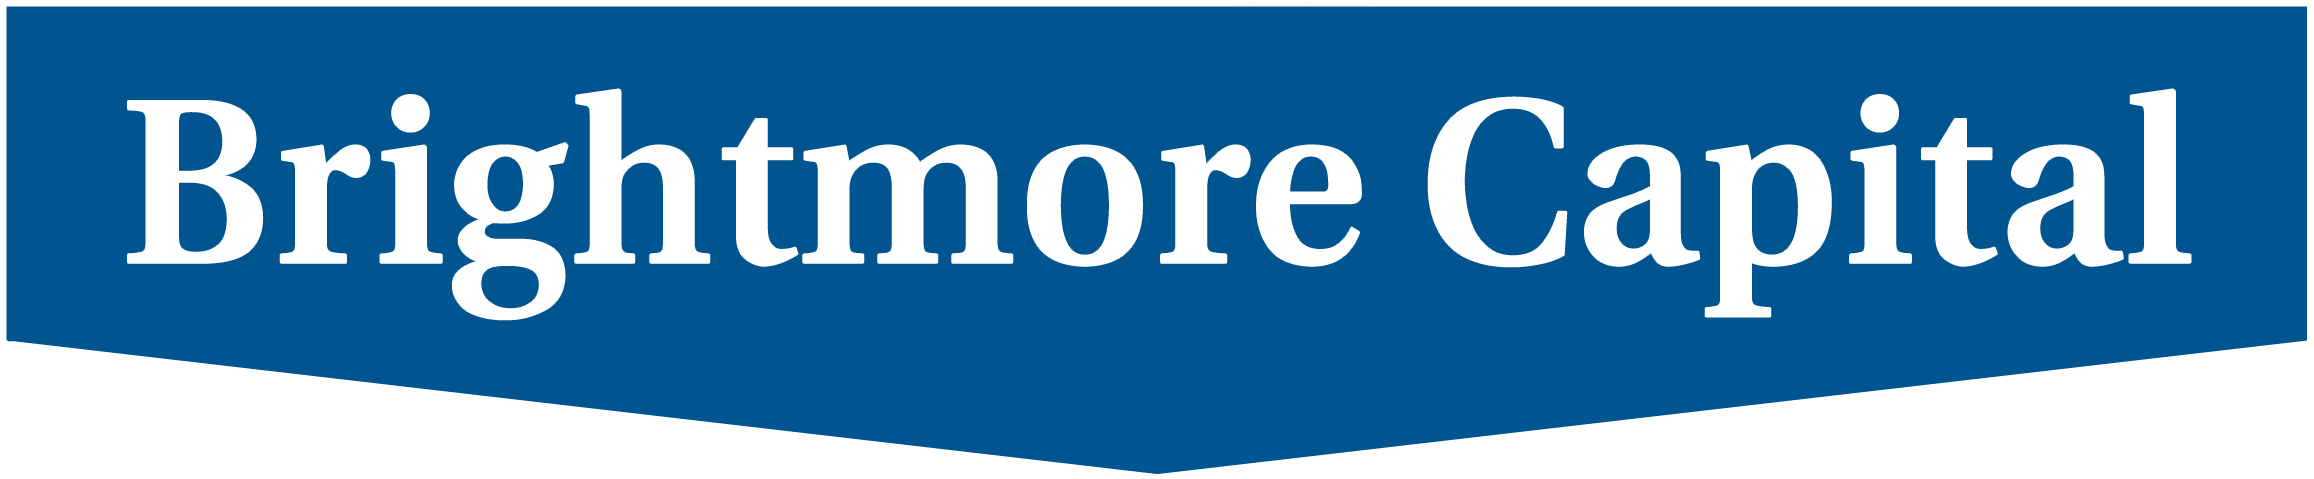 Brightmore Capital - Logo